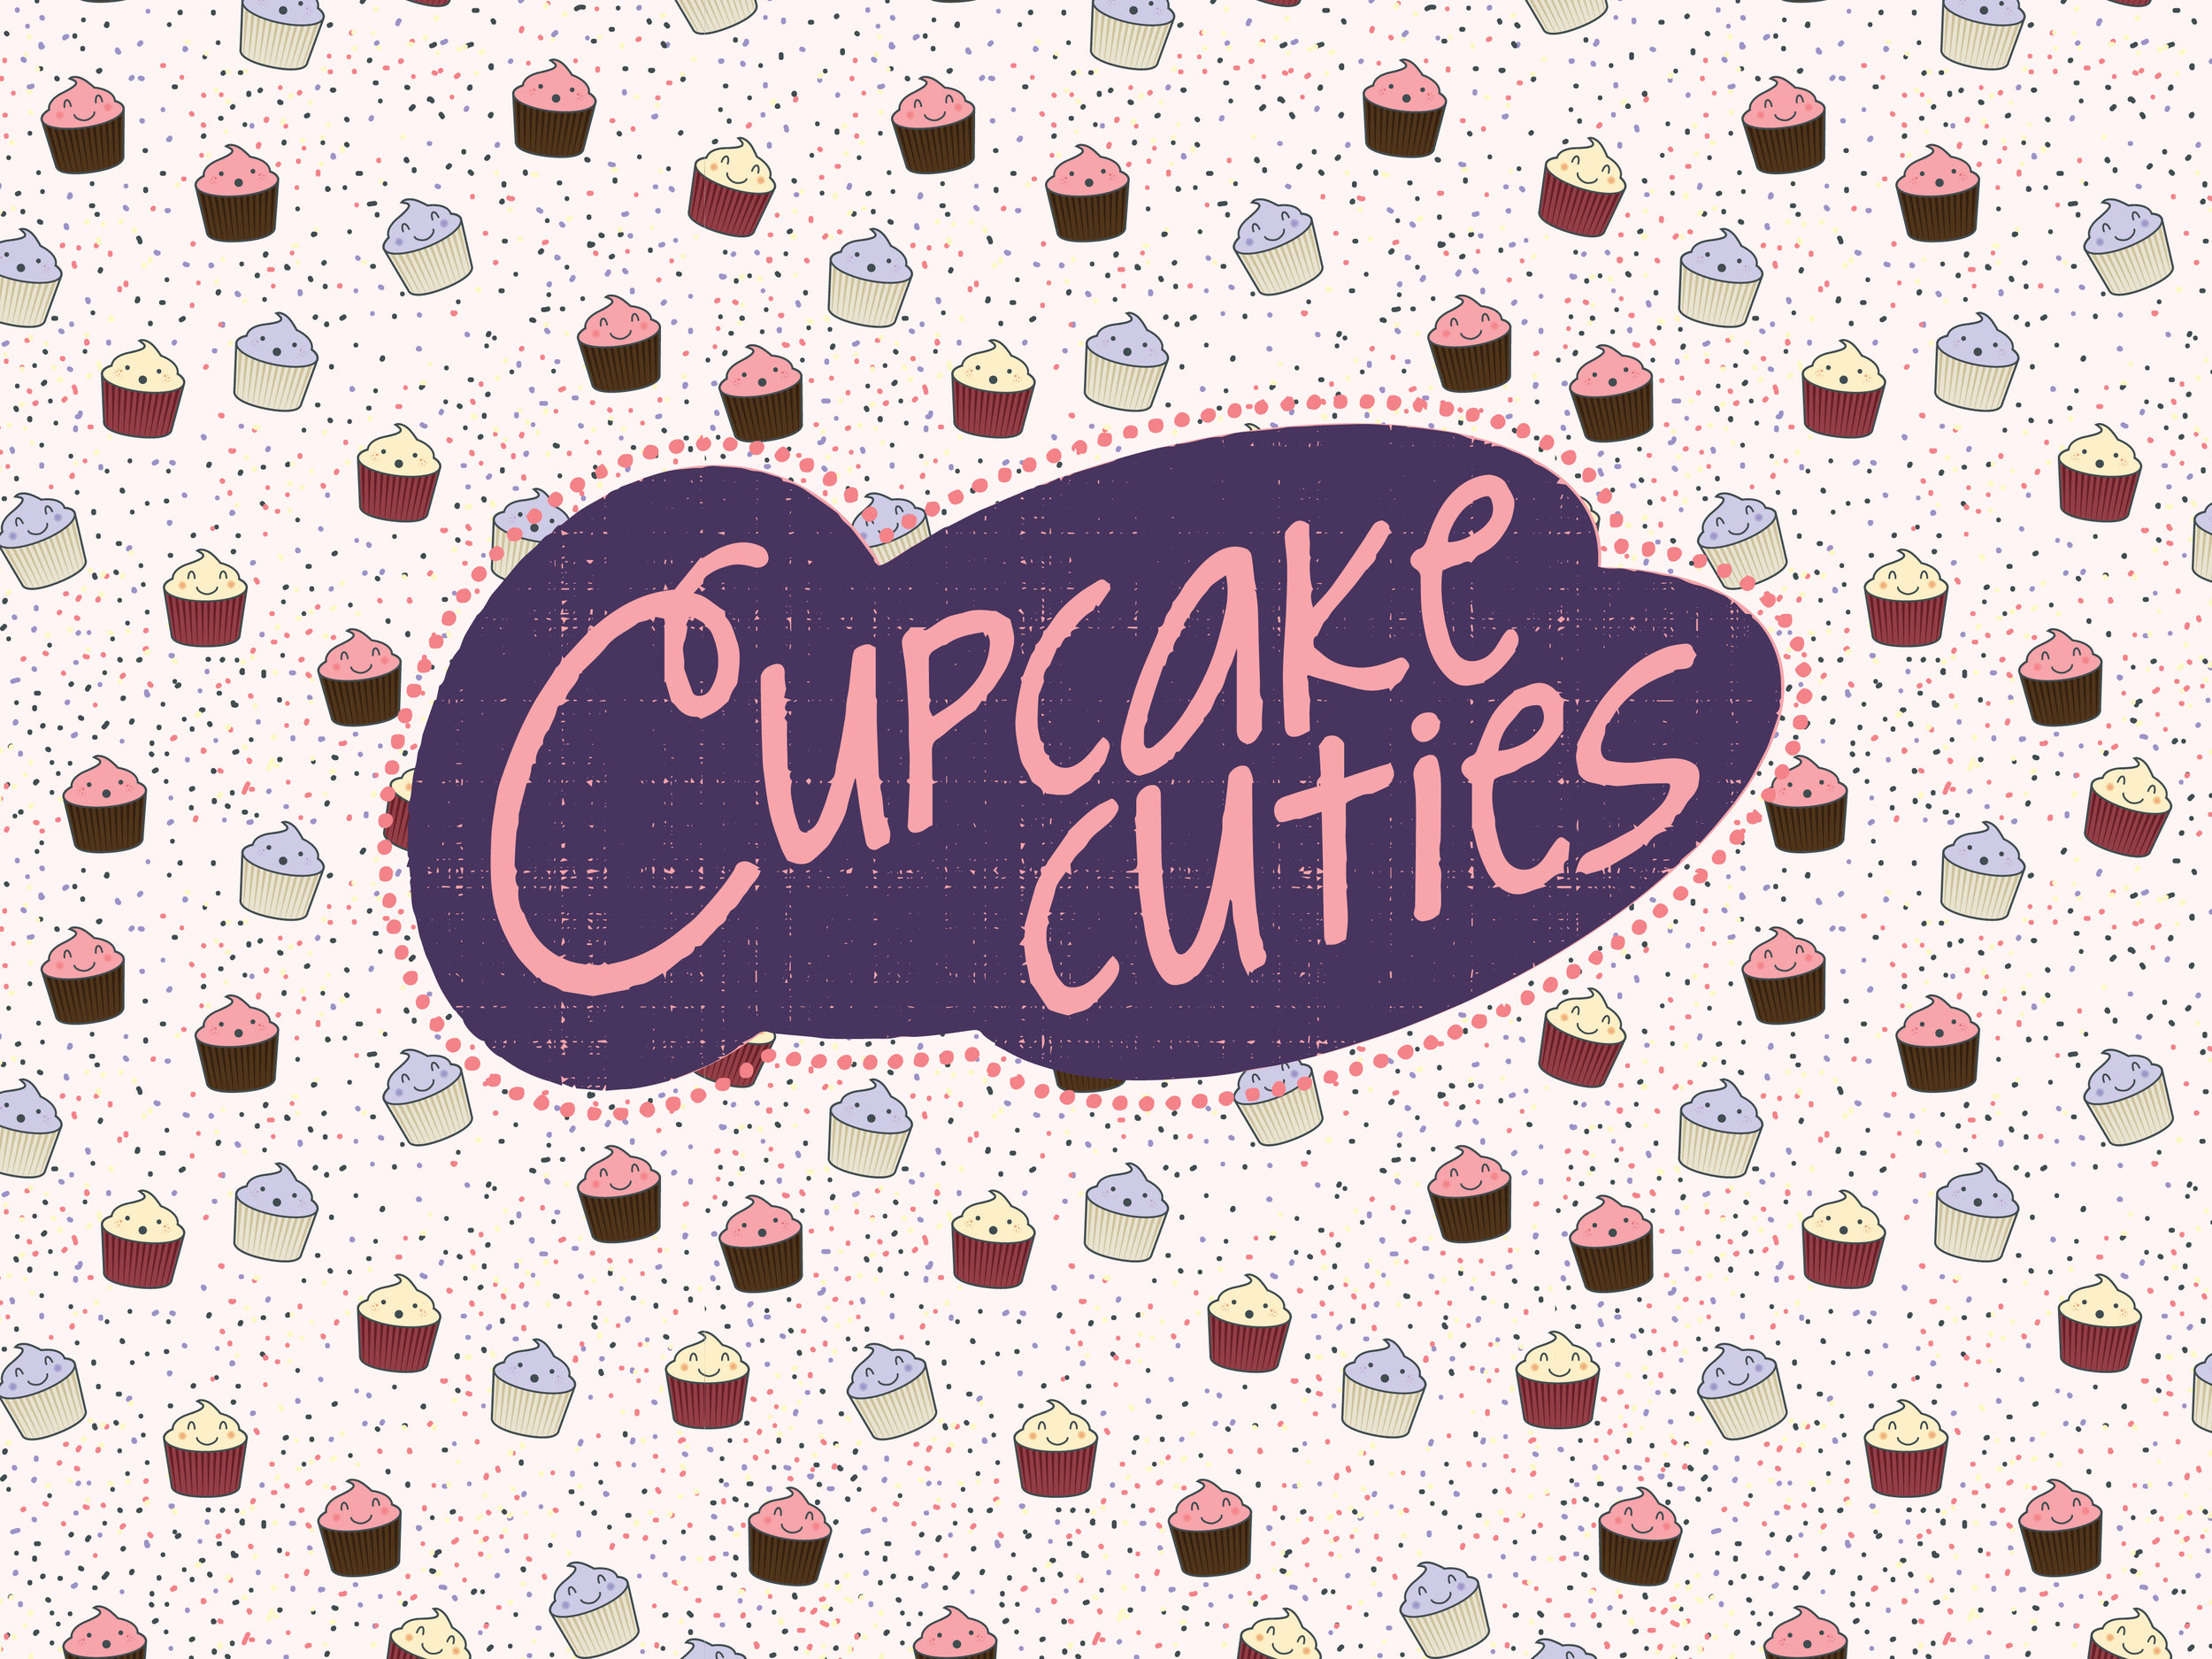 cupcake cuties epub.jpg